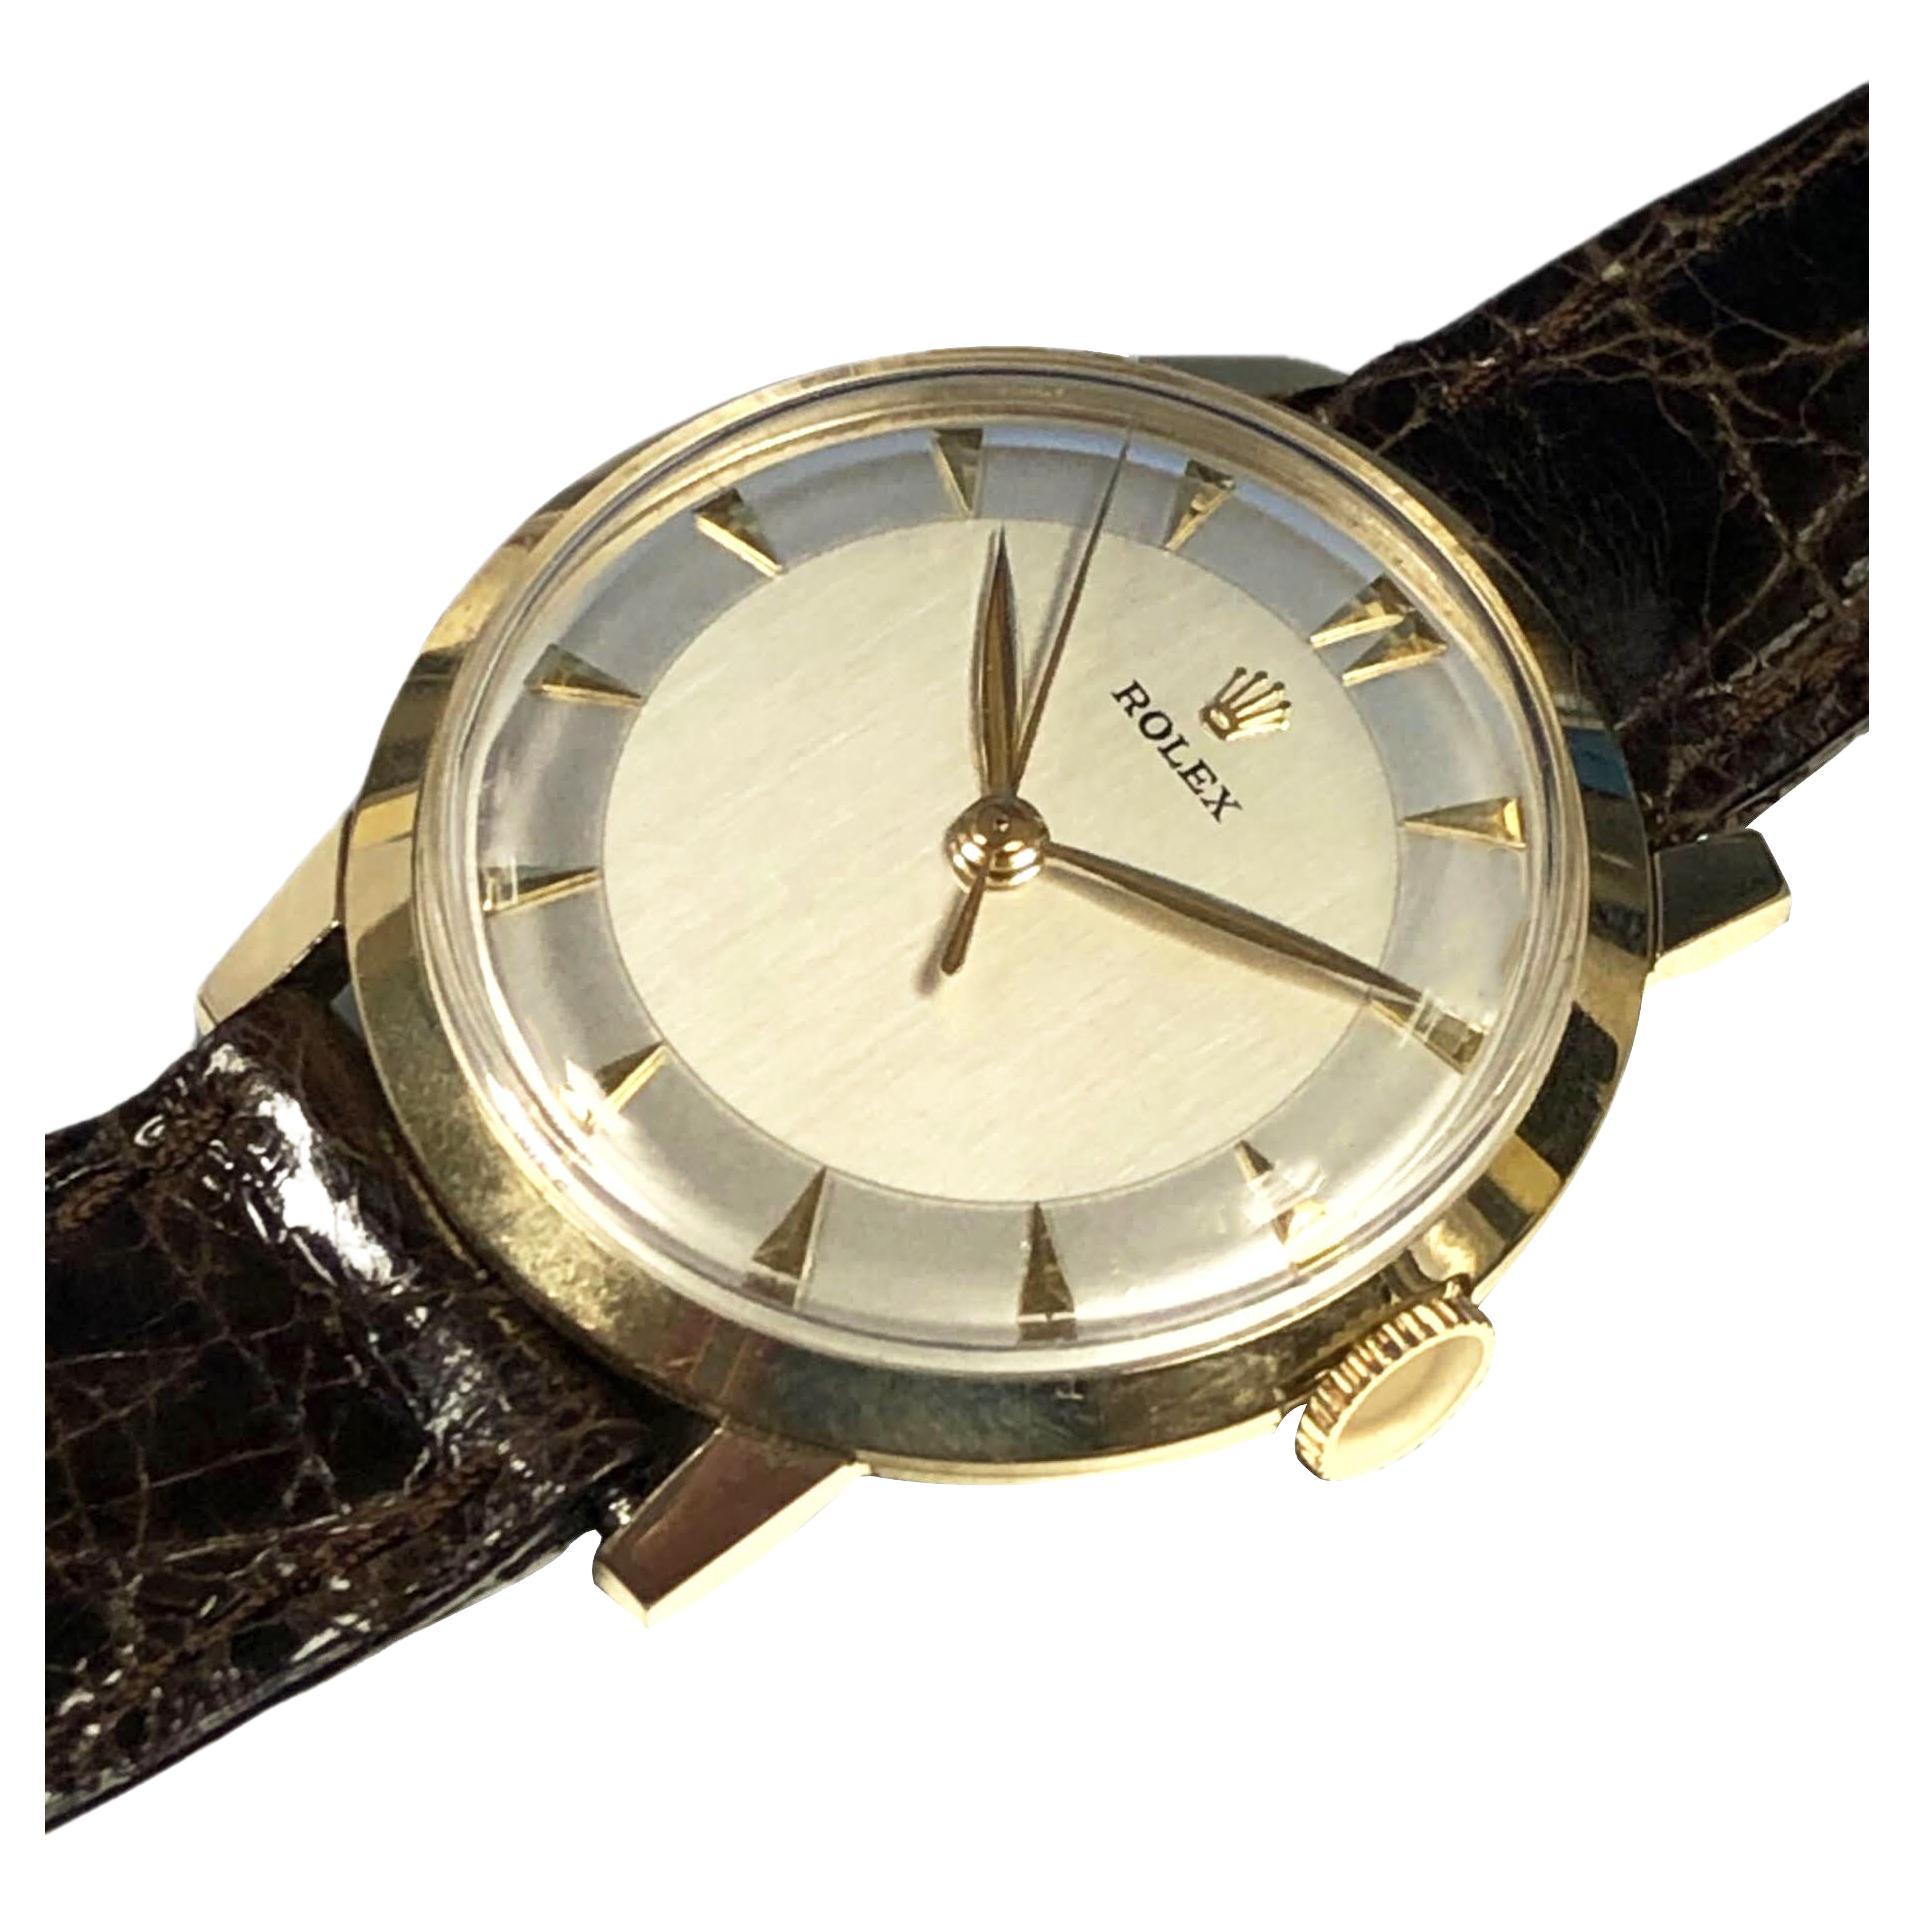 Rolex Vintage Yellow Gold Strap Model Wrist Watch